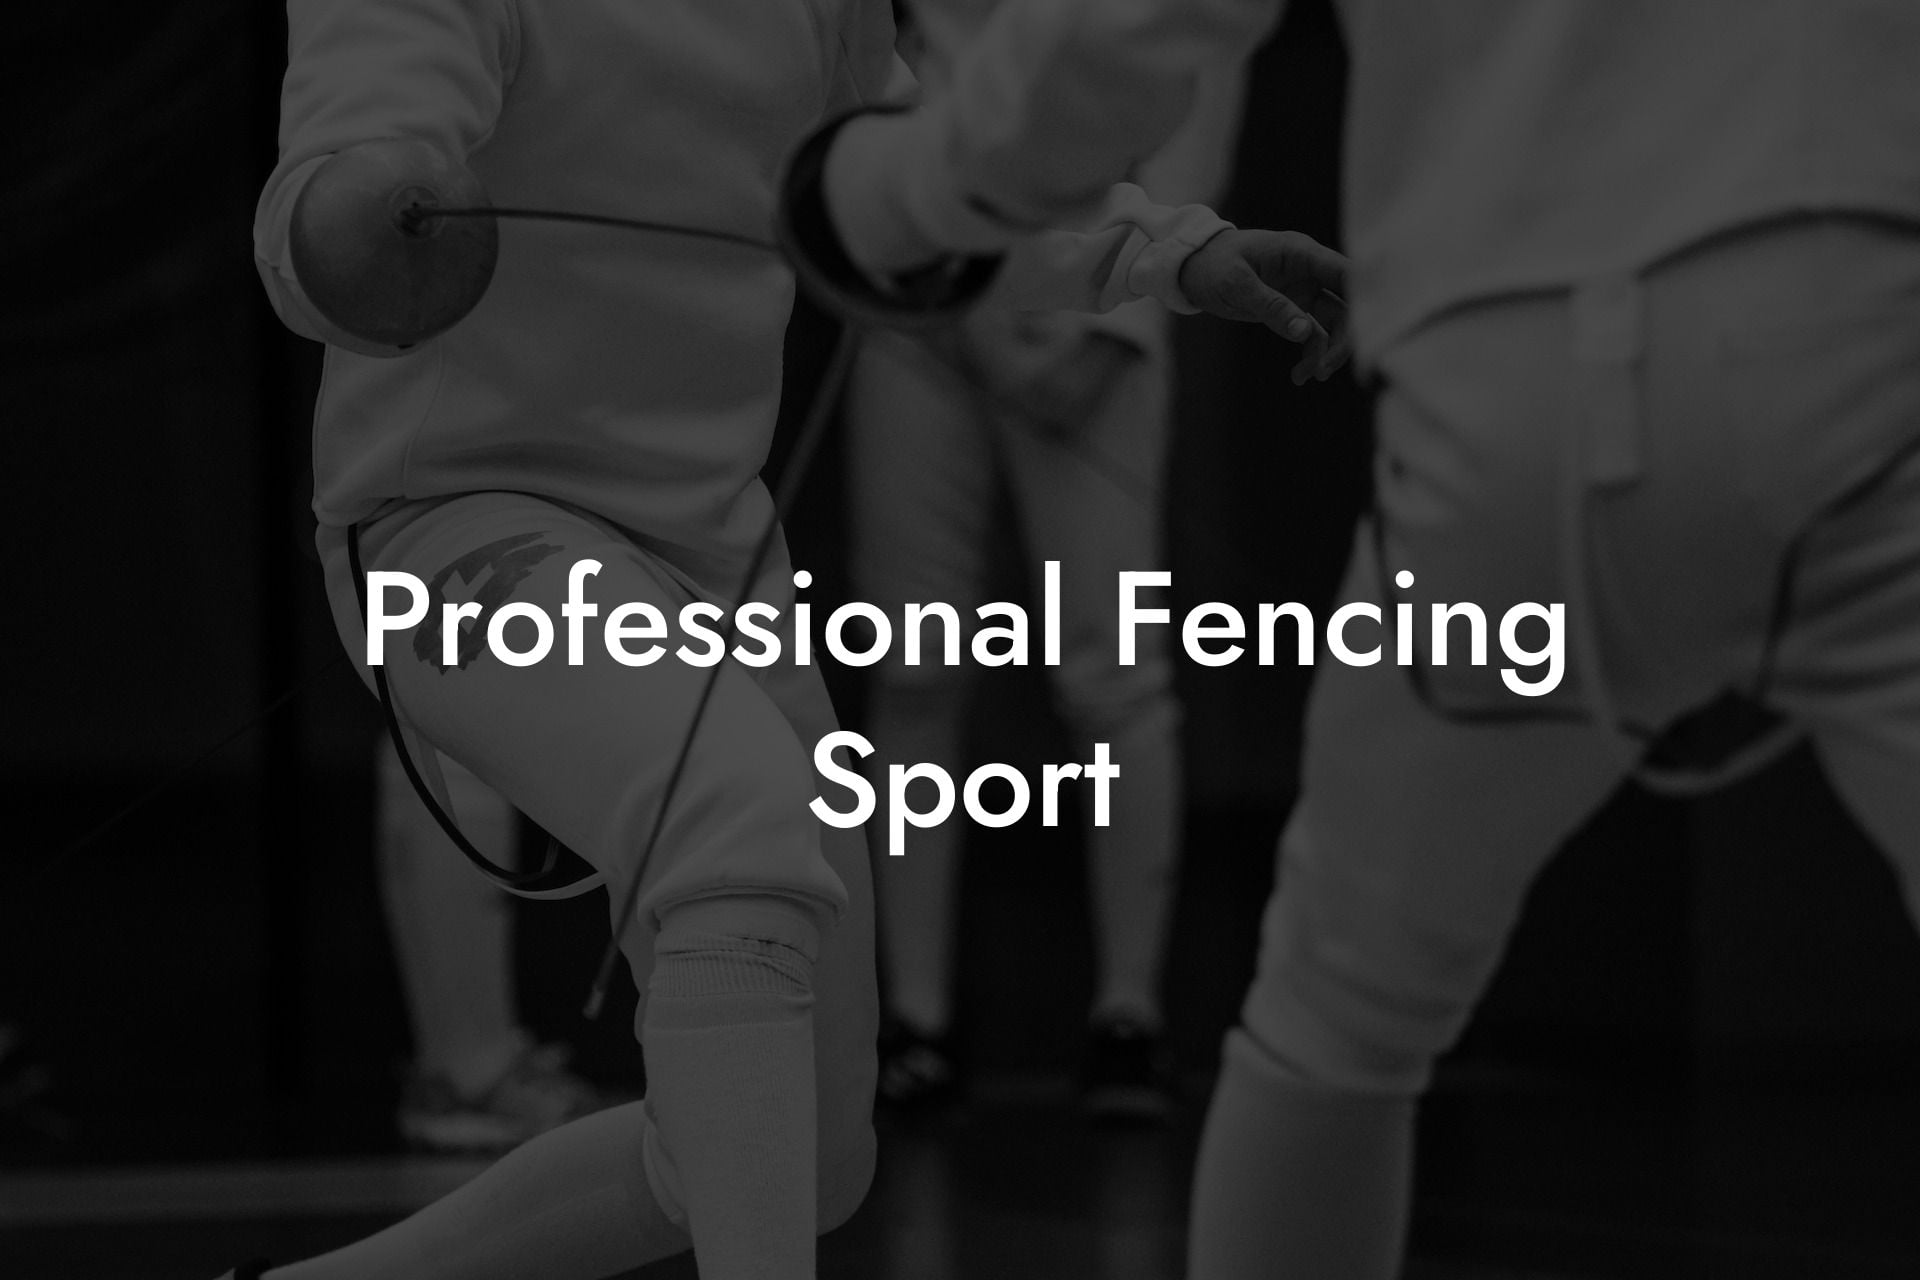 Professional Fencing Sport